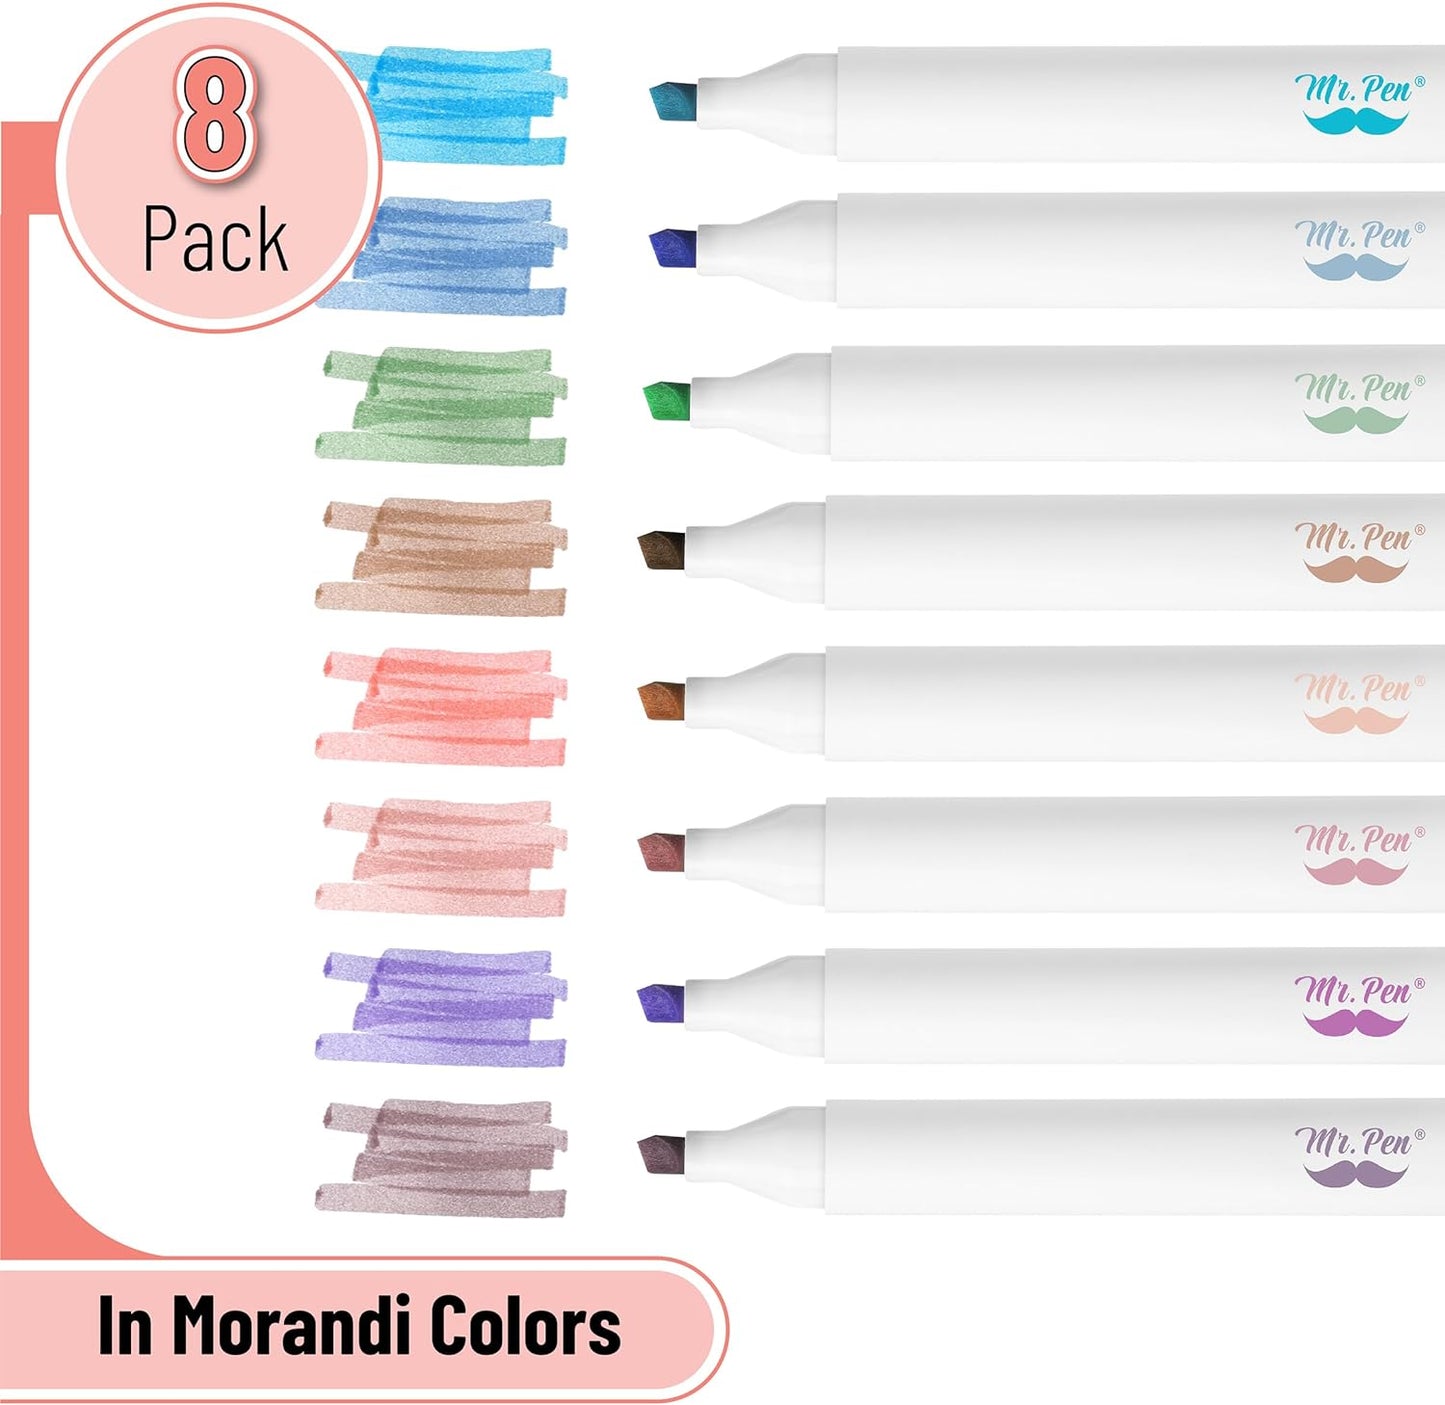 Morandi Colors Highlighter Set - 8 Pack